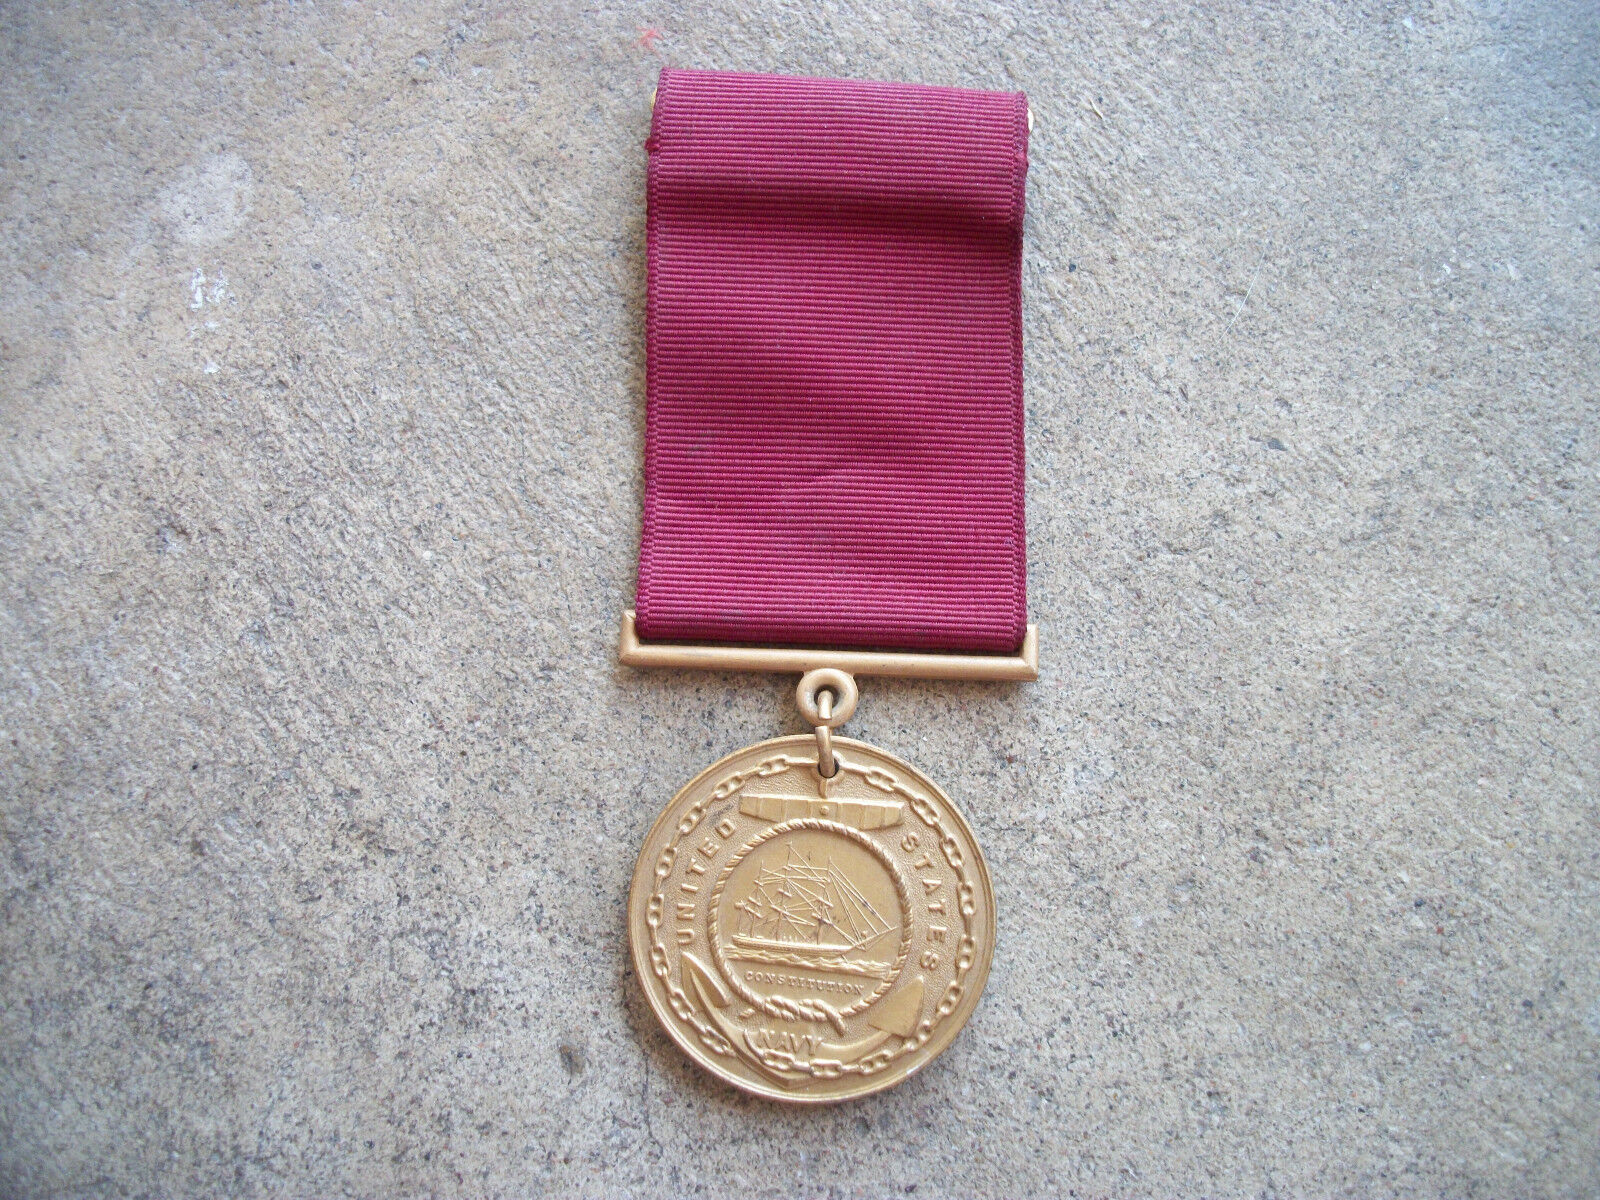 Korean War era Good Conduct Medal named dated 1951 Navy